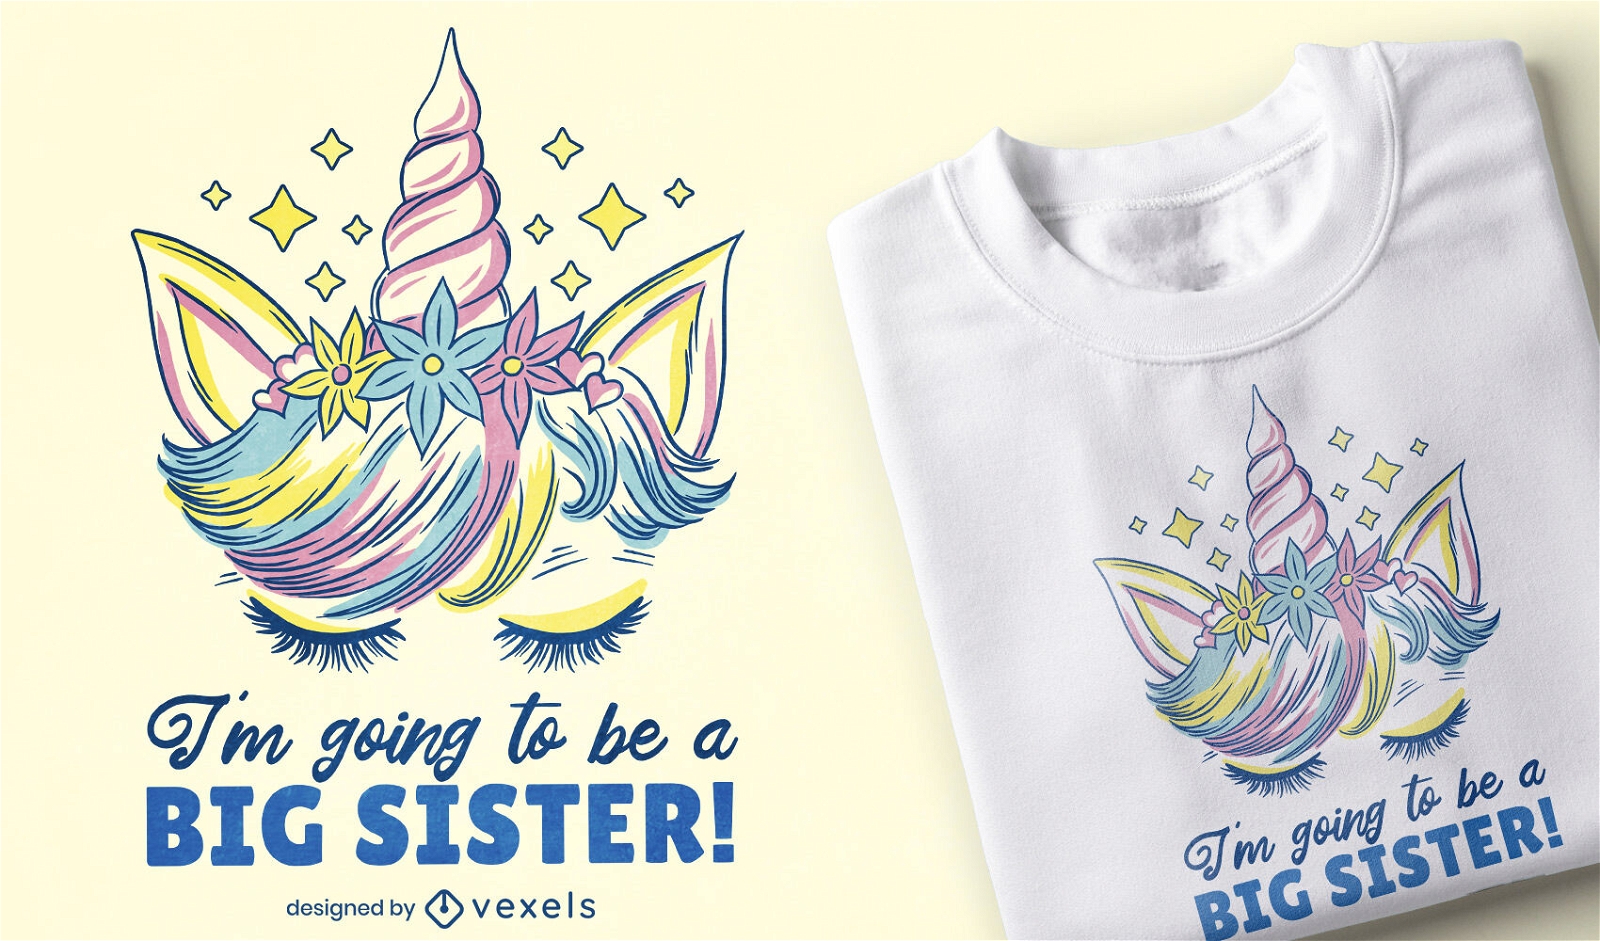 Big sister unicorn quote t-shirt design